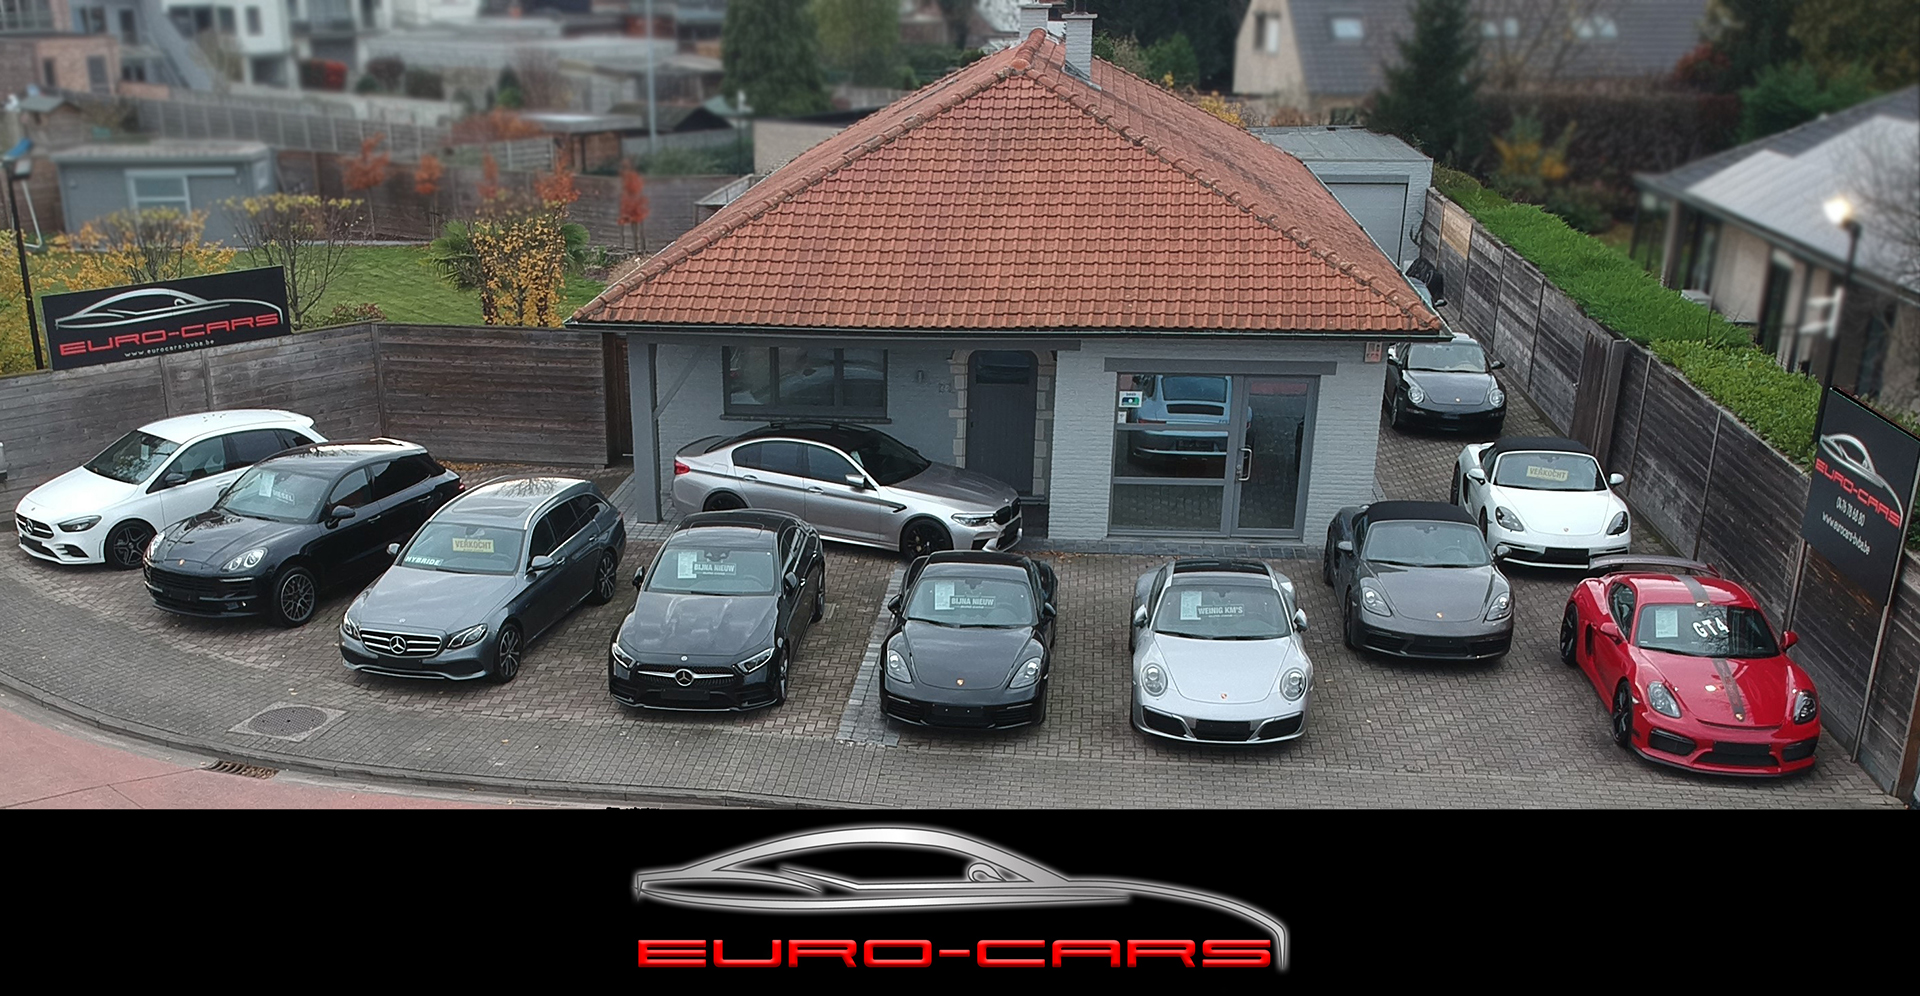 EuroCars bv